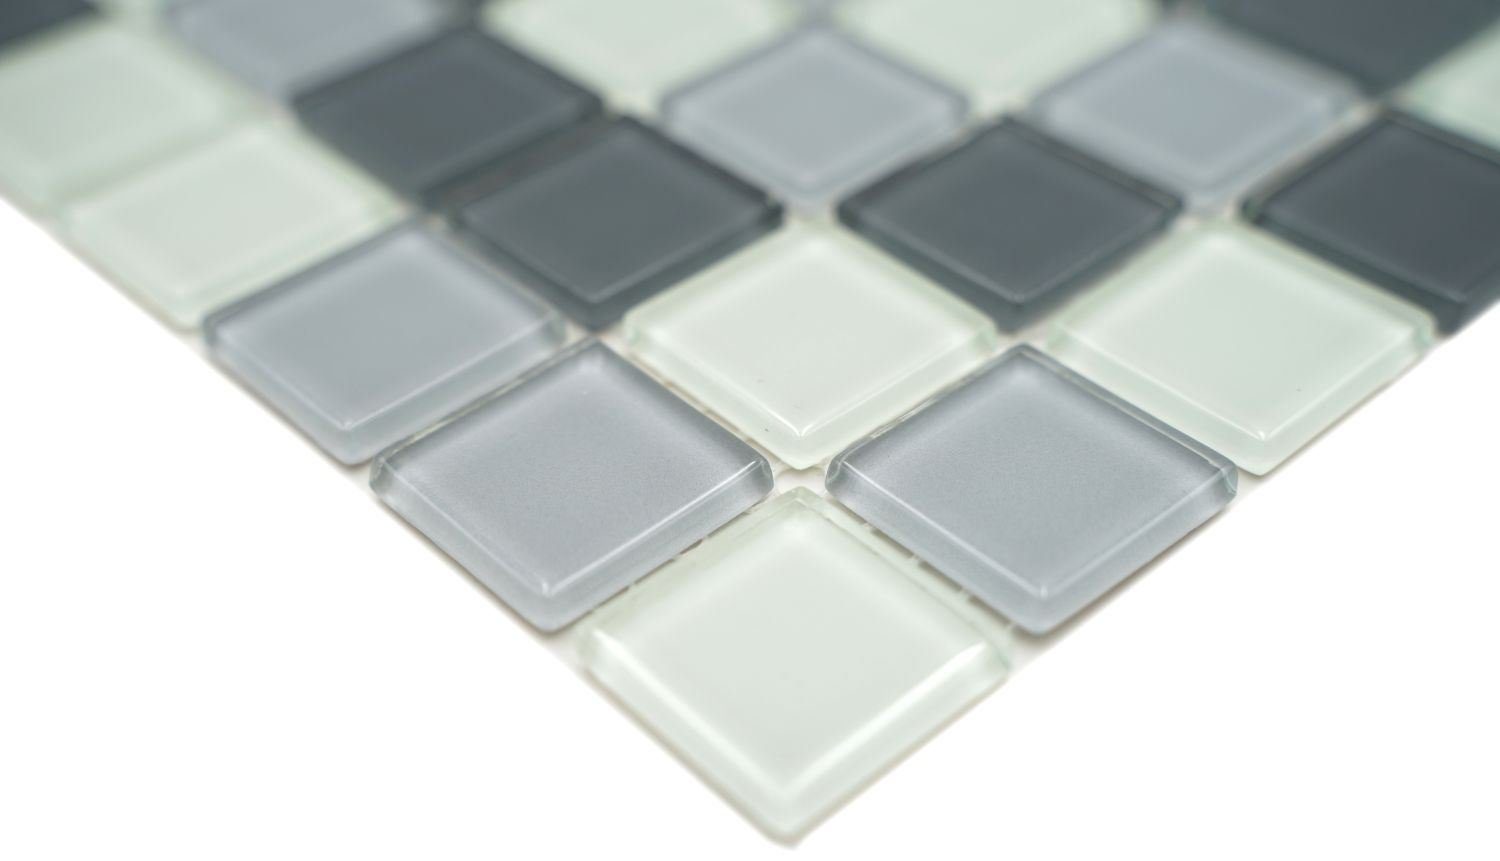 Mosani Mosaikfliesen Mosaik Glasmosaik Küche Fliesen BAD grau anthrazit WC weiss